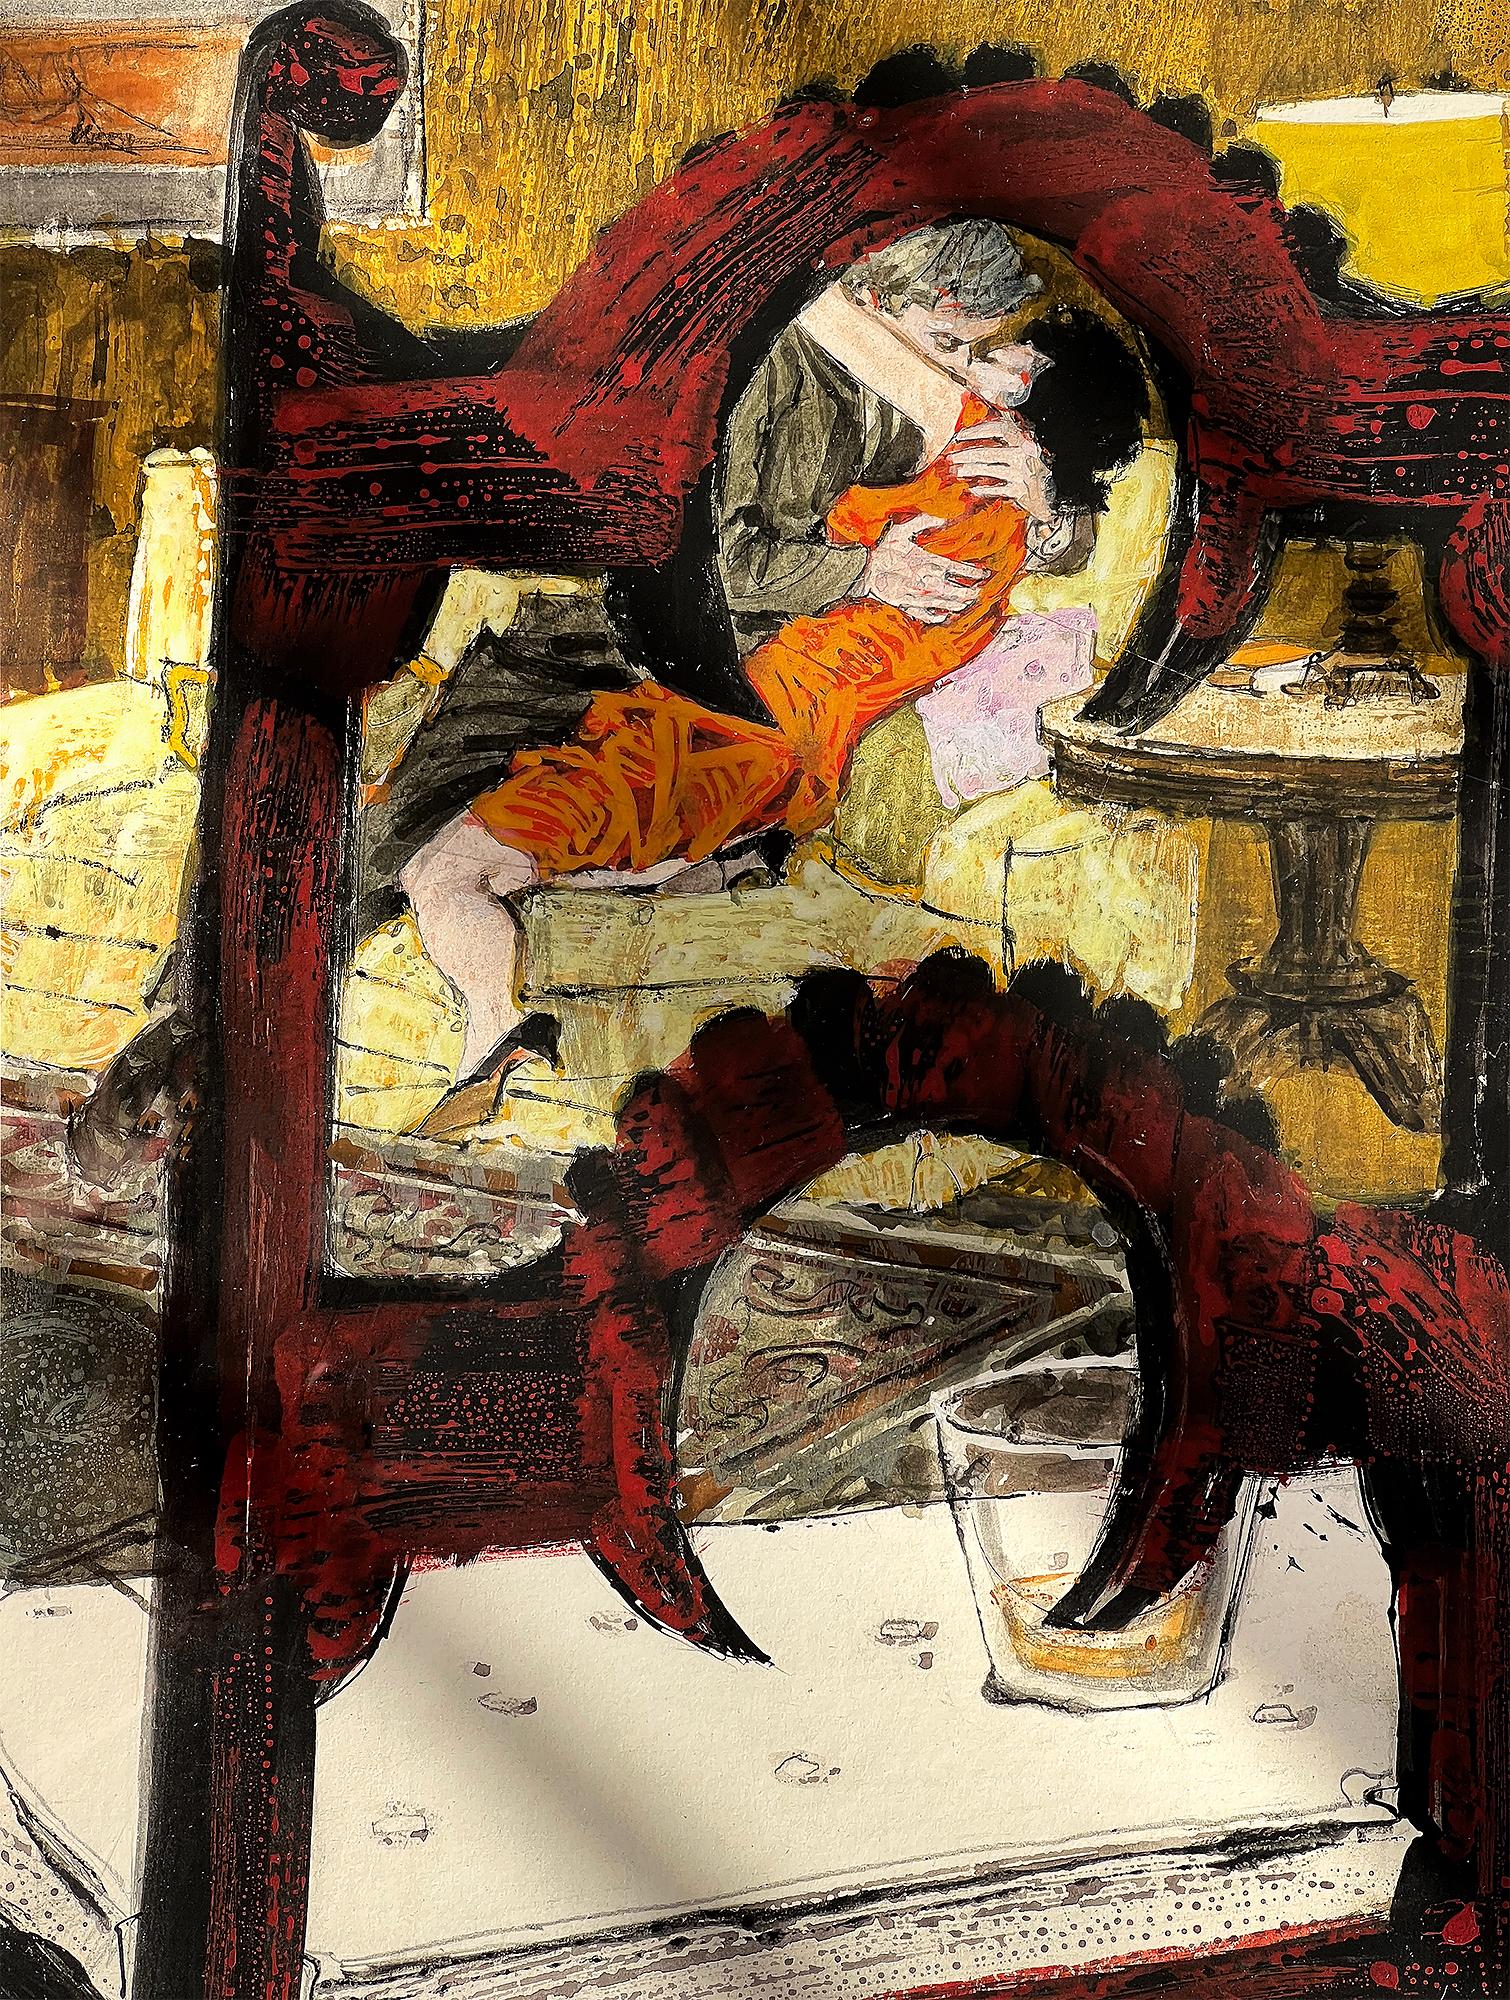  Voyeur-Stuhl. Romantic Couple Kissen und Umarmen, Illustration aus der Mitte des Jahrhunderts   (Romantik), Painting, von Alex Ross